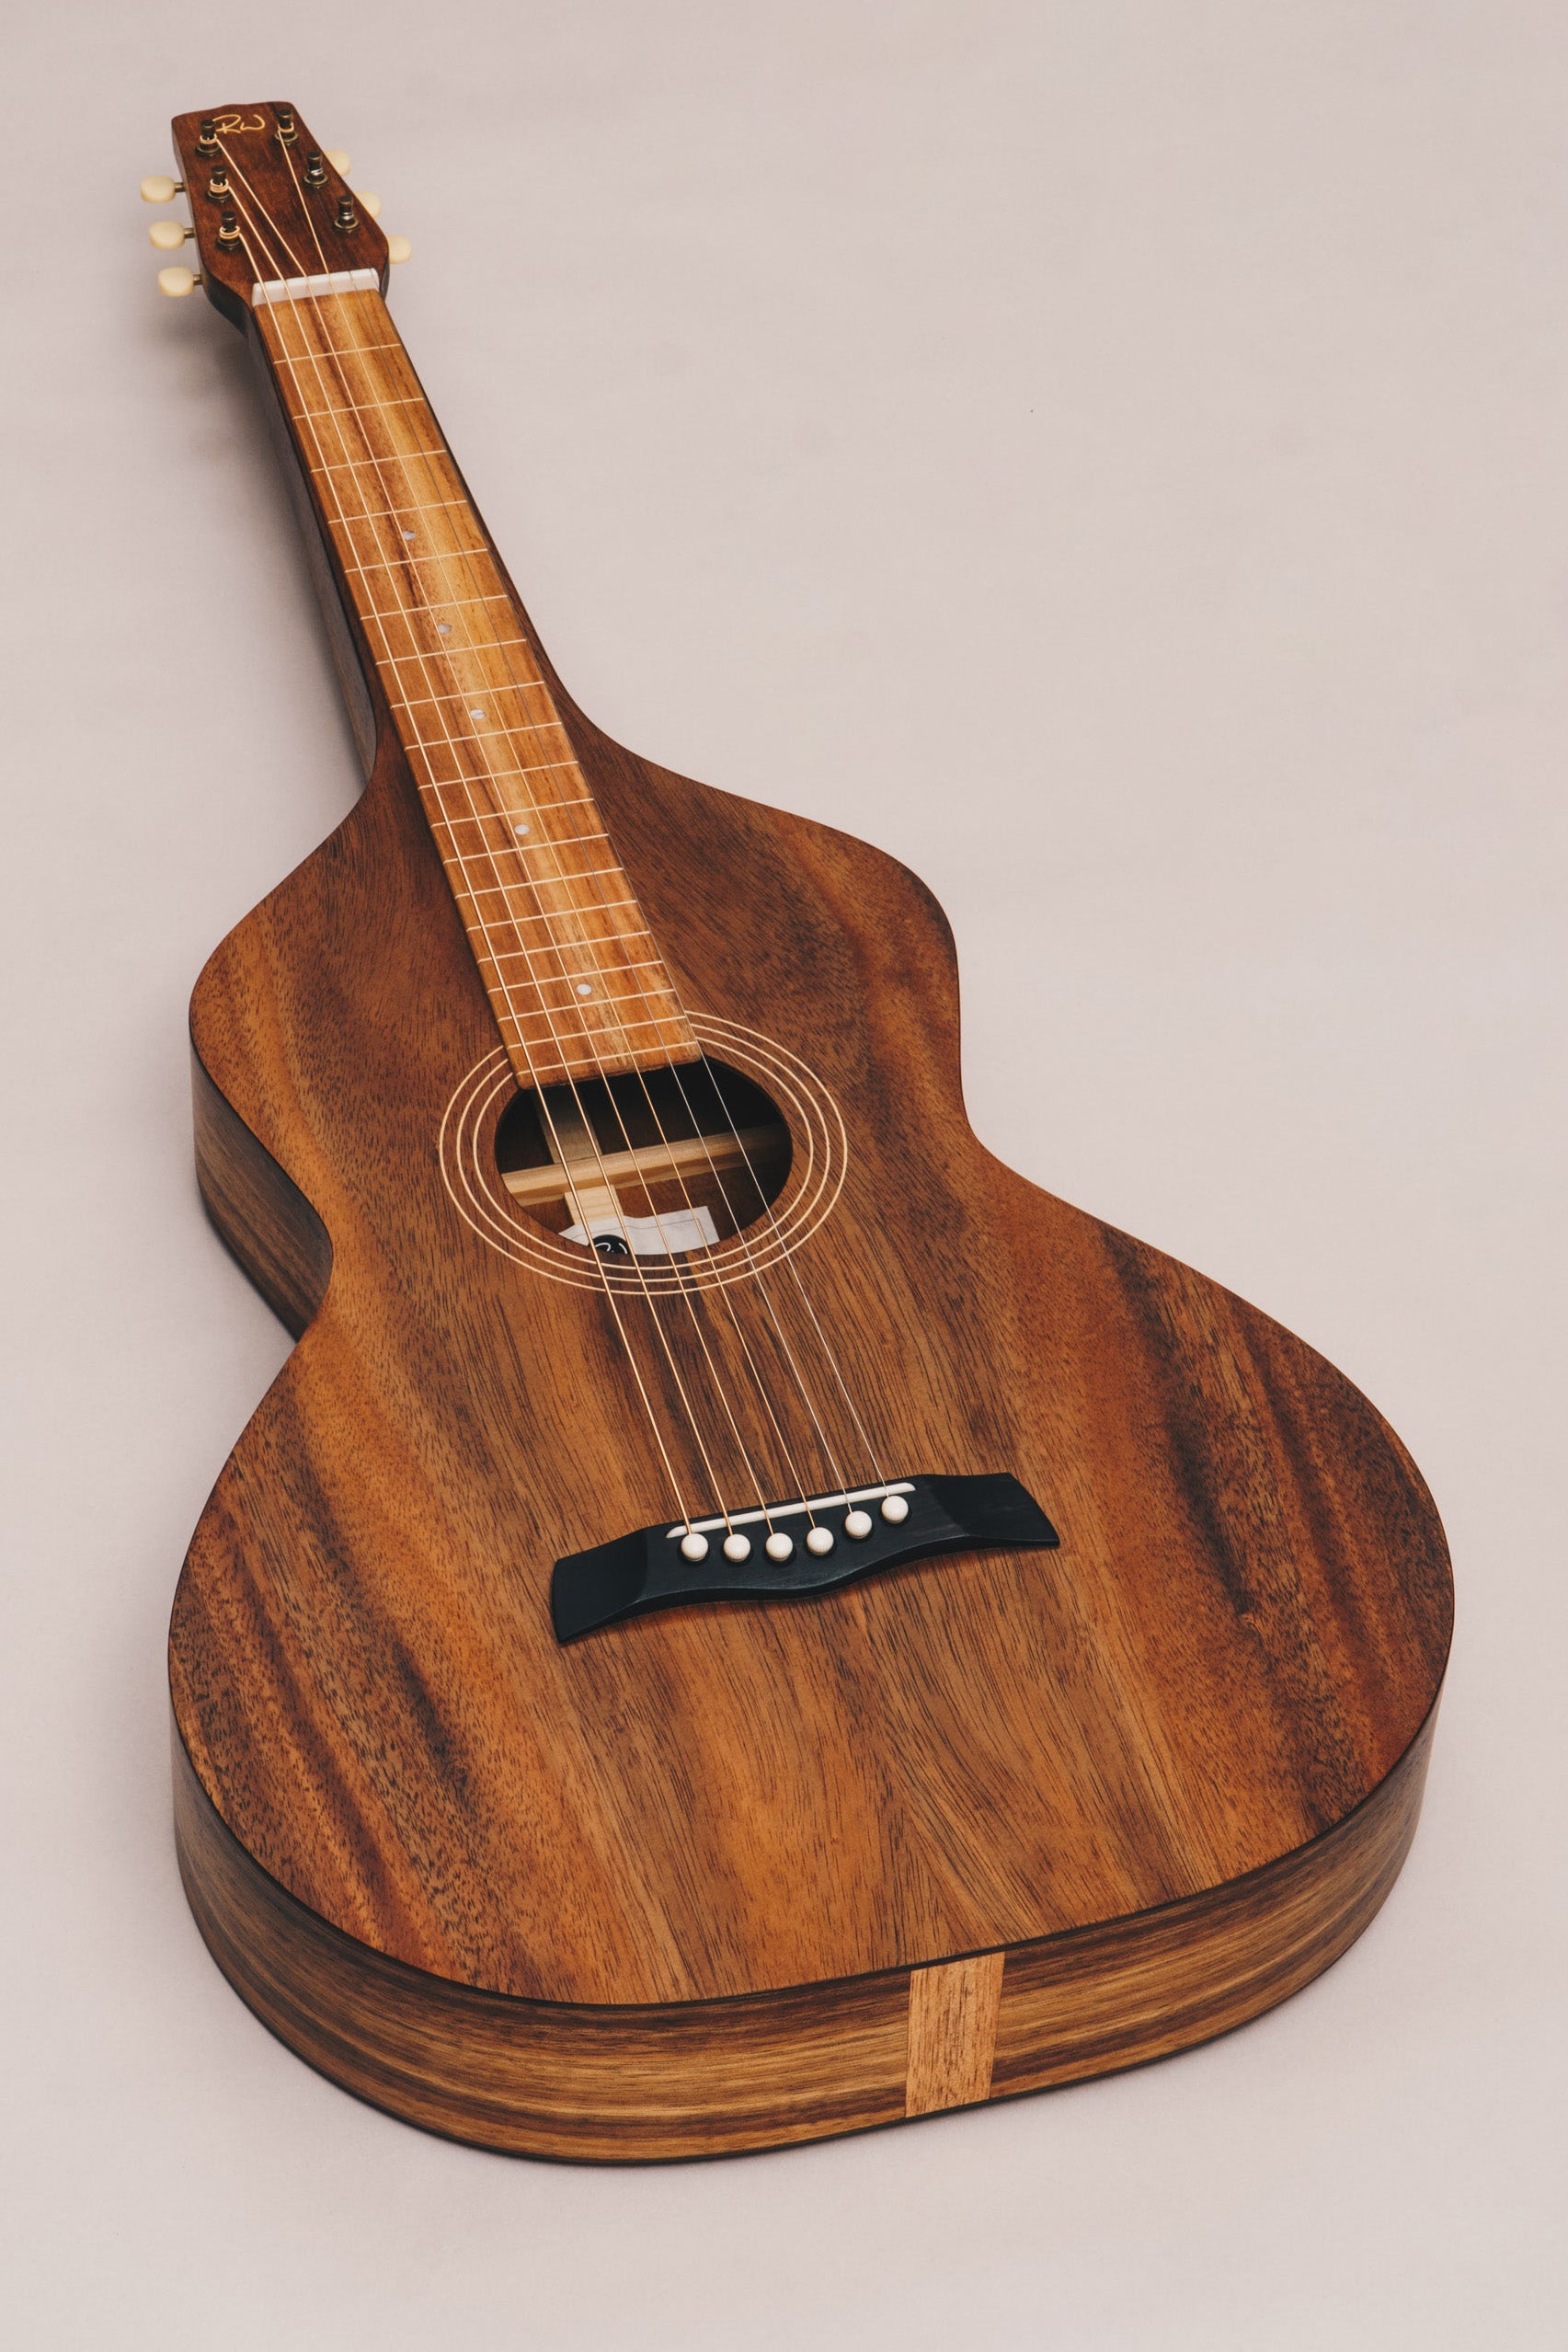 Hawaiian Koa Style 1 Weissenborn Guitar Weissenborn Acoustic Lap Steel Slide Guitar by master luthier Richard Wilson. Handcrafted in Australia. Serial no. RW2136-325.